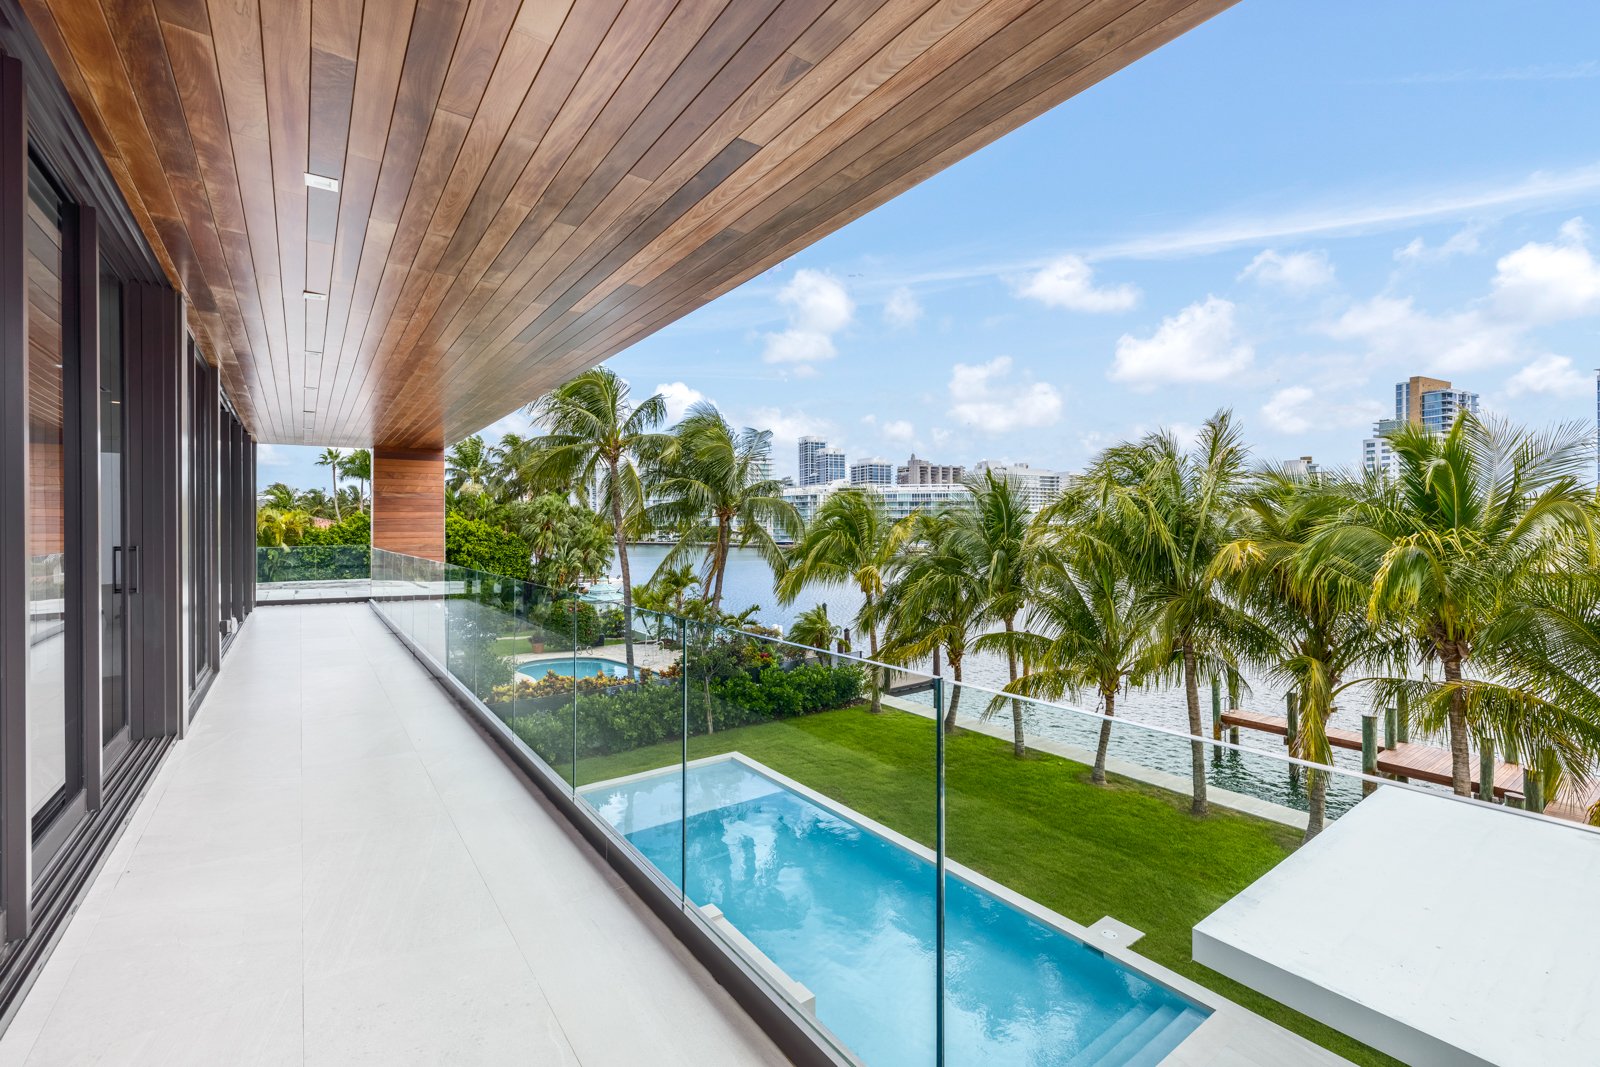 Grammy Award-Winning Rapper Future Buys Allison Island Home For $16.3 Million On Miami Beach 16.jpg